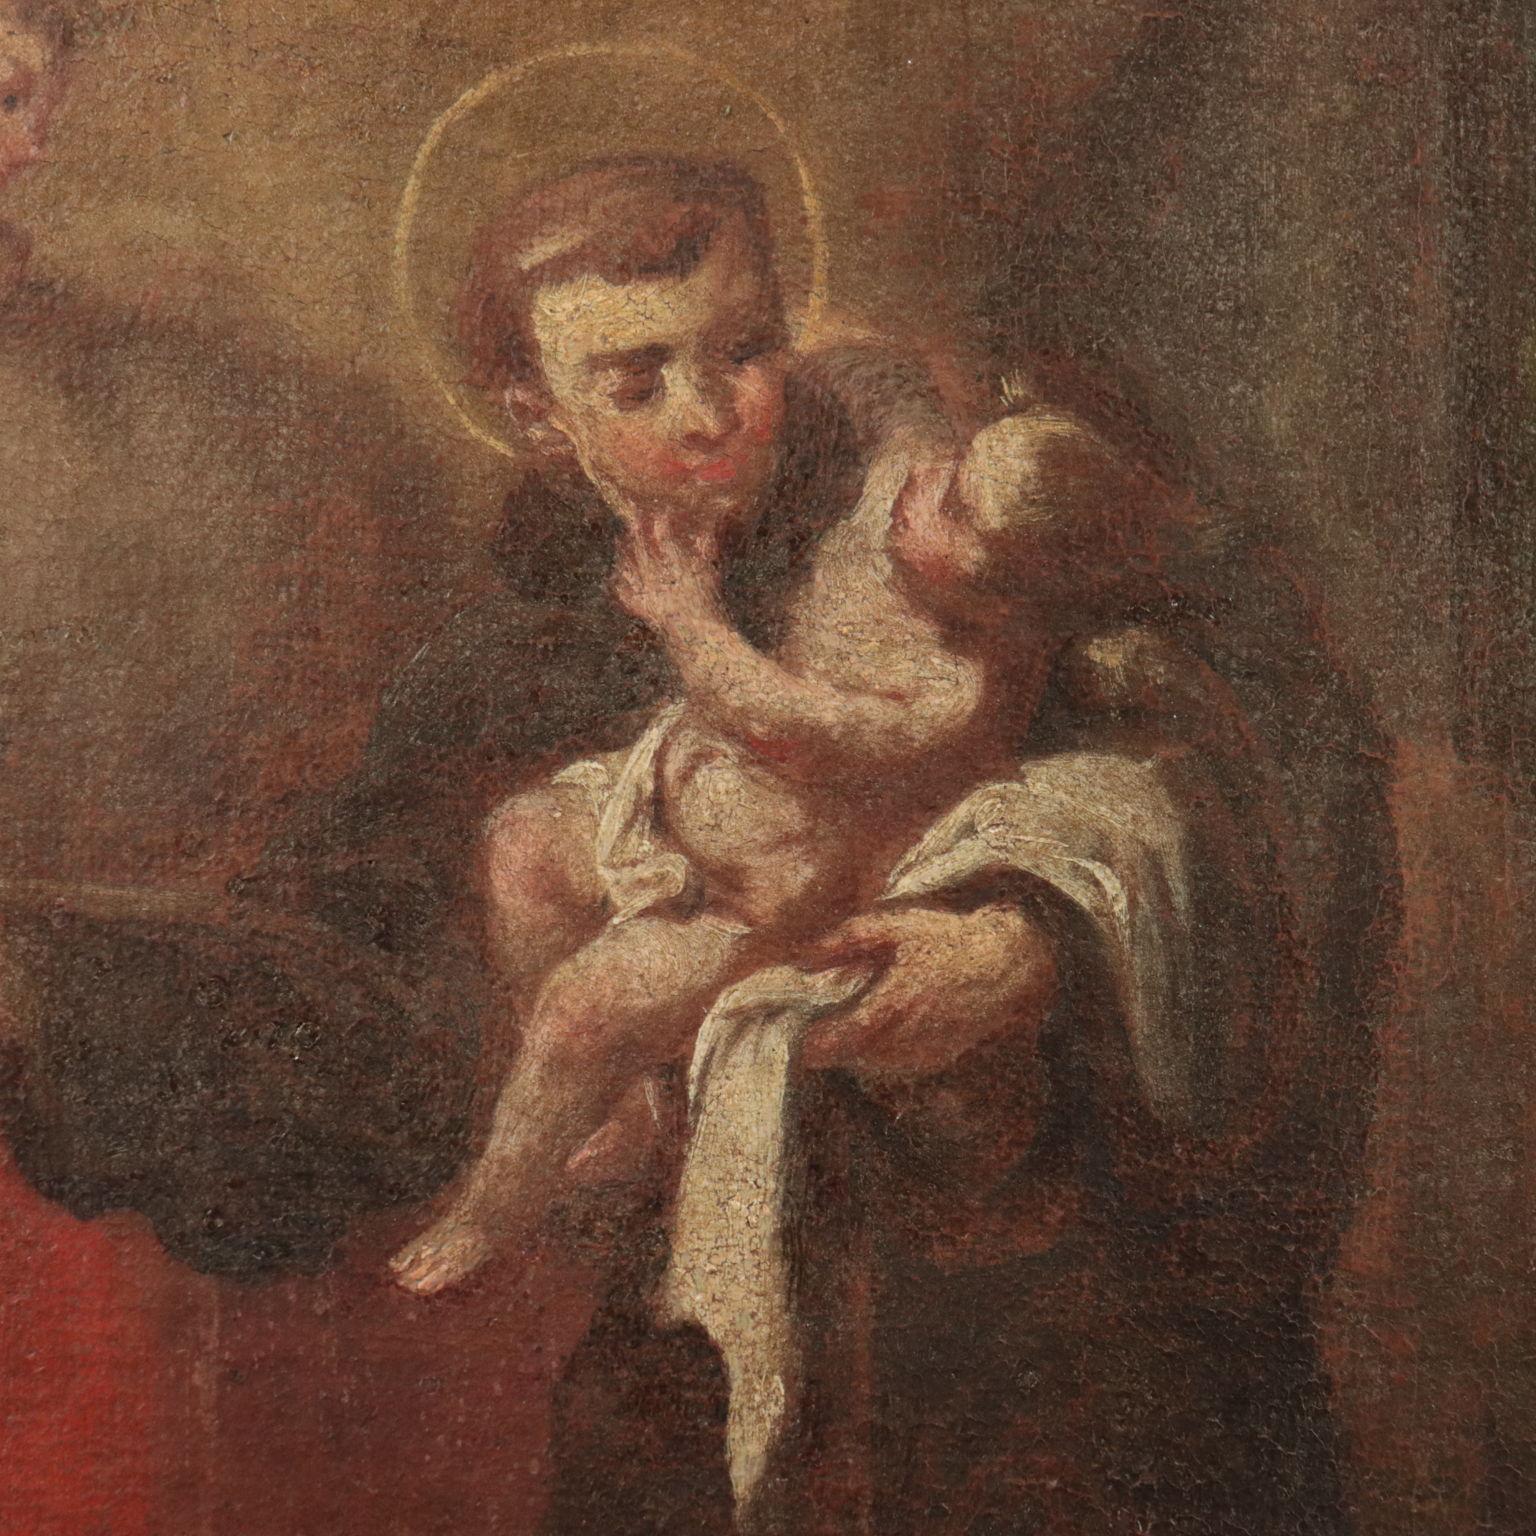 st anthony with baby jesus